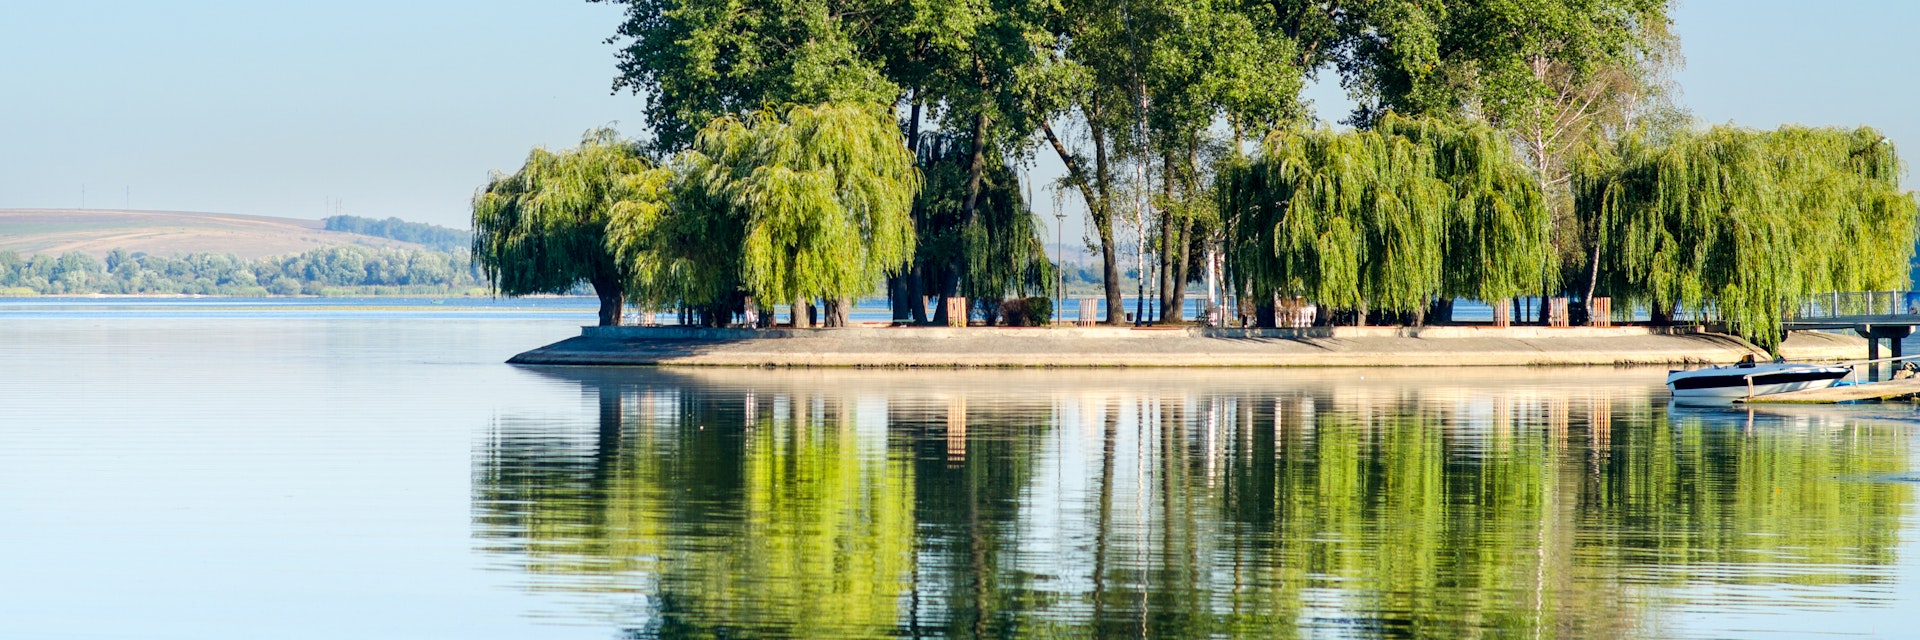 Ternopil Lake in Ukraine.